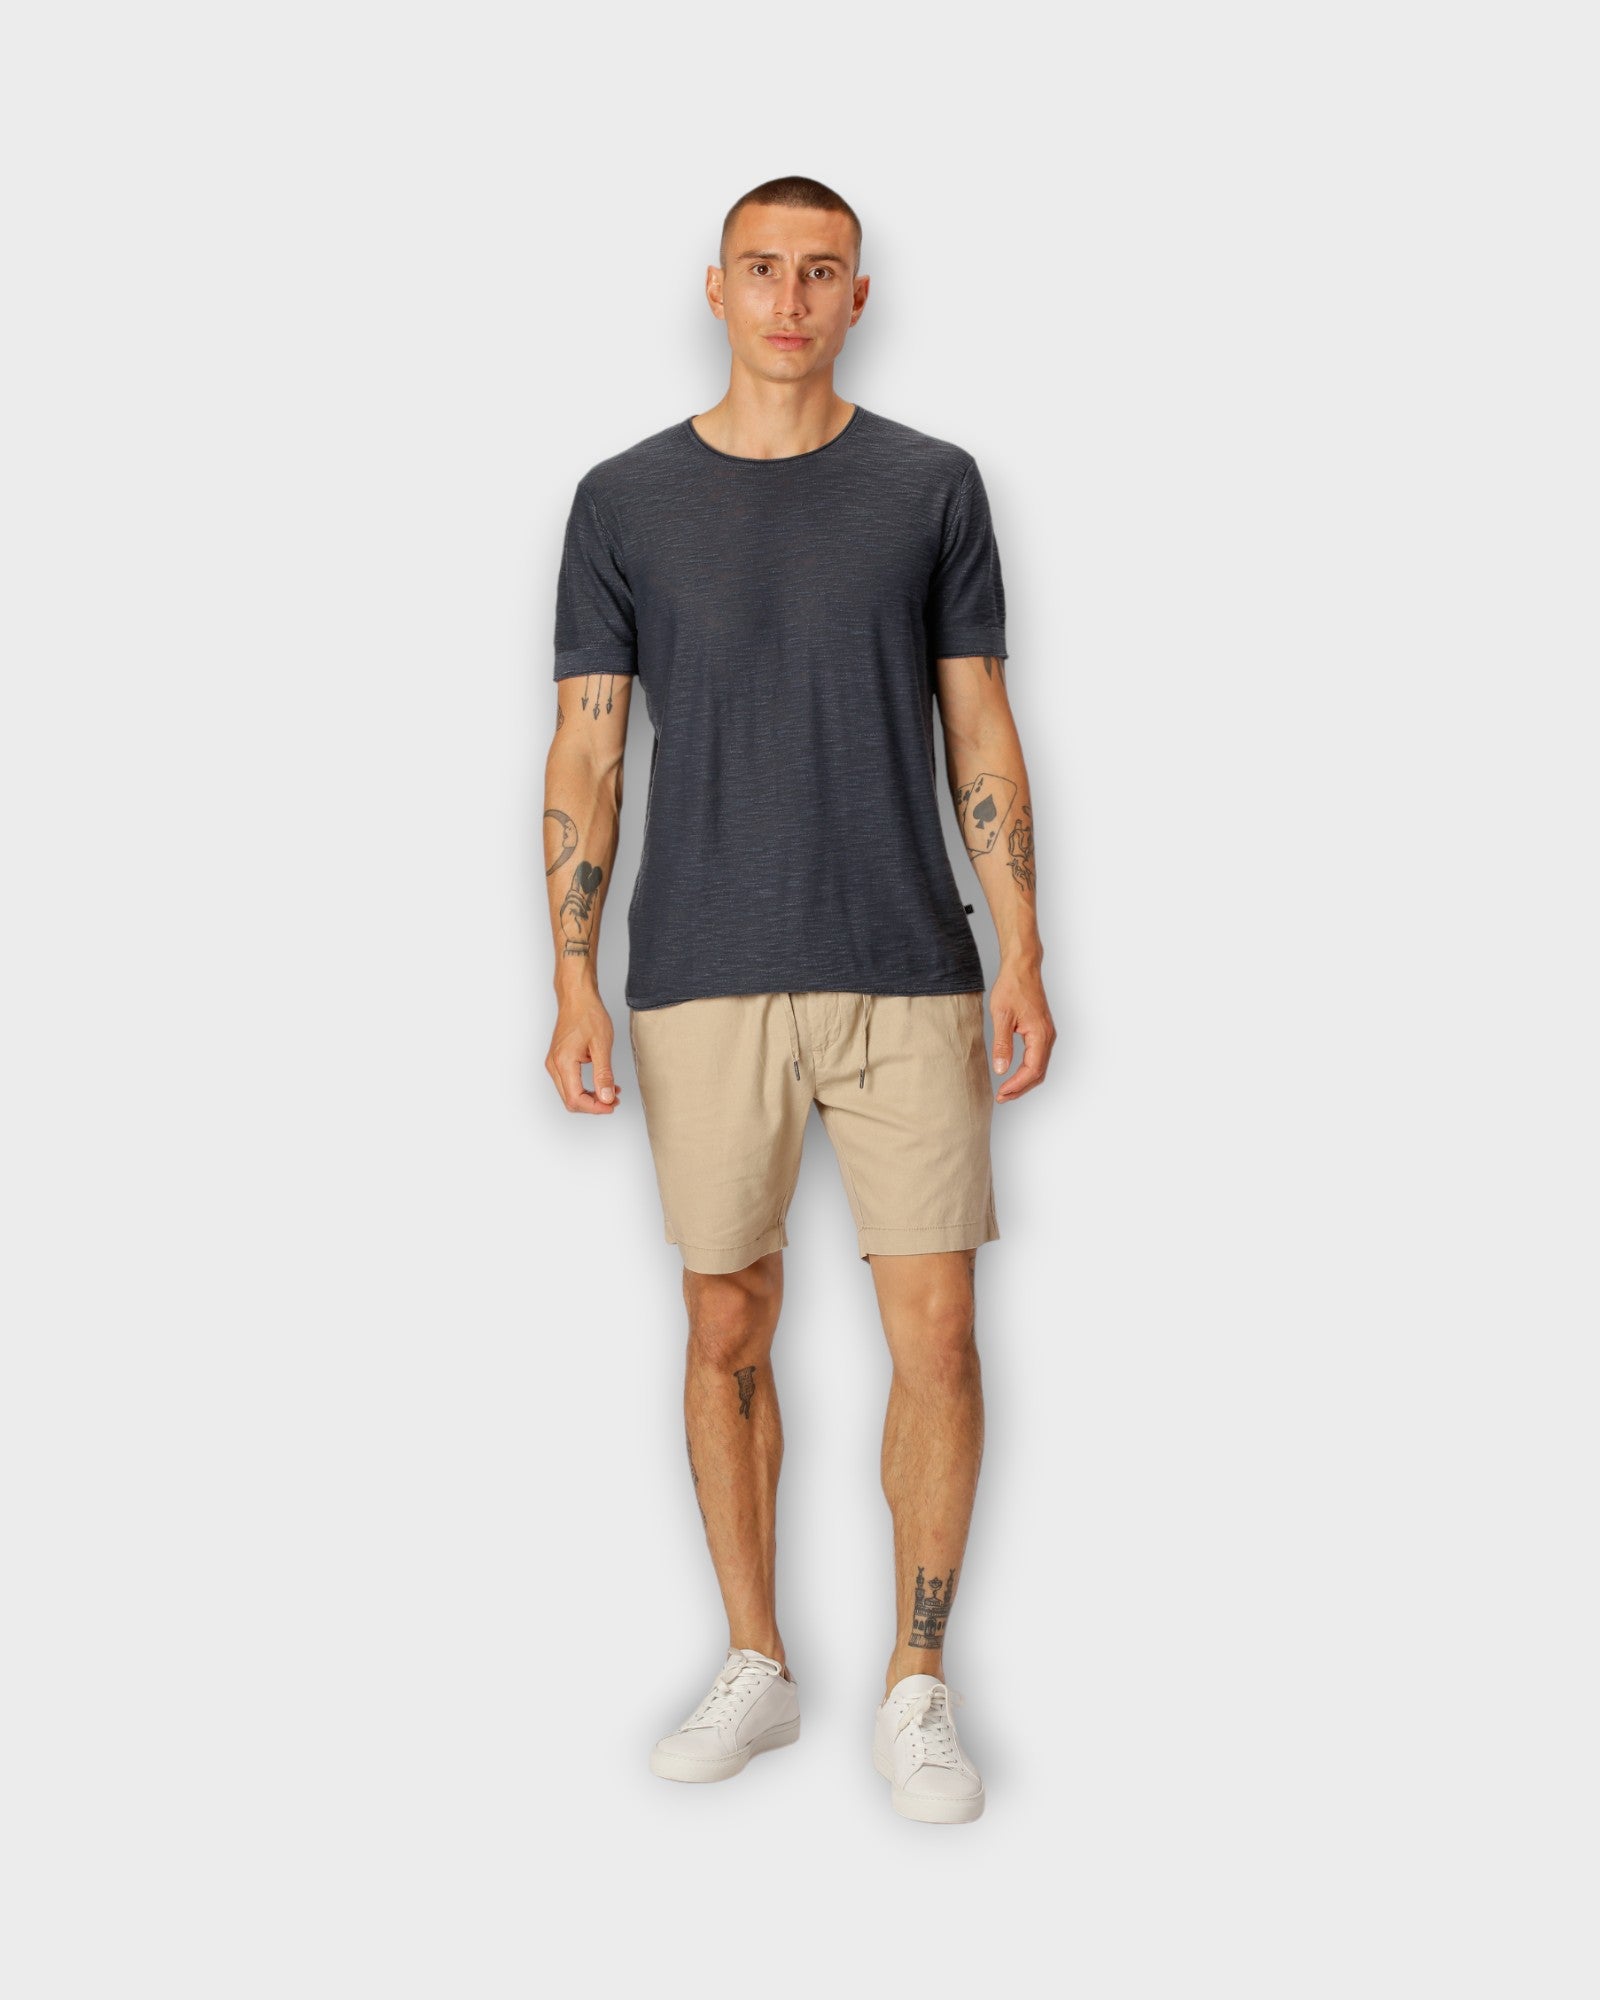 CC1860 Barcelona Cotton Linen Shorts Khaki. Sandfarvet hørshorts til mænd fra Clean Cut Copenhagen. Her set på model forfra.